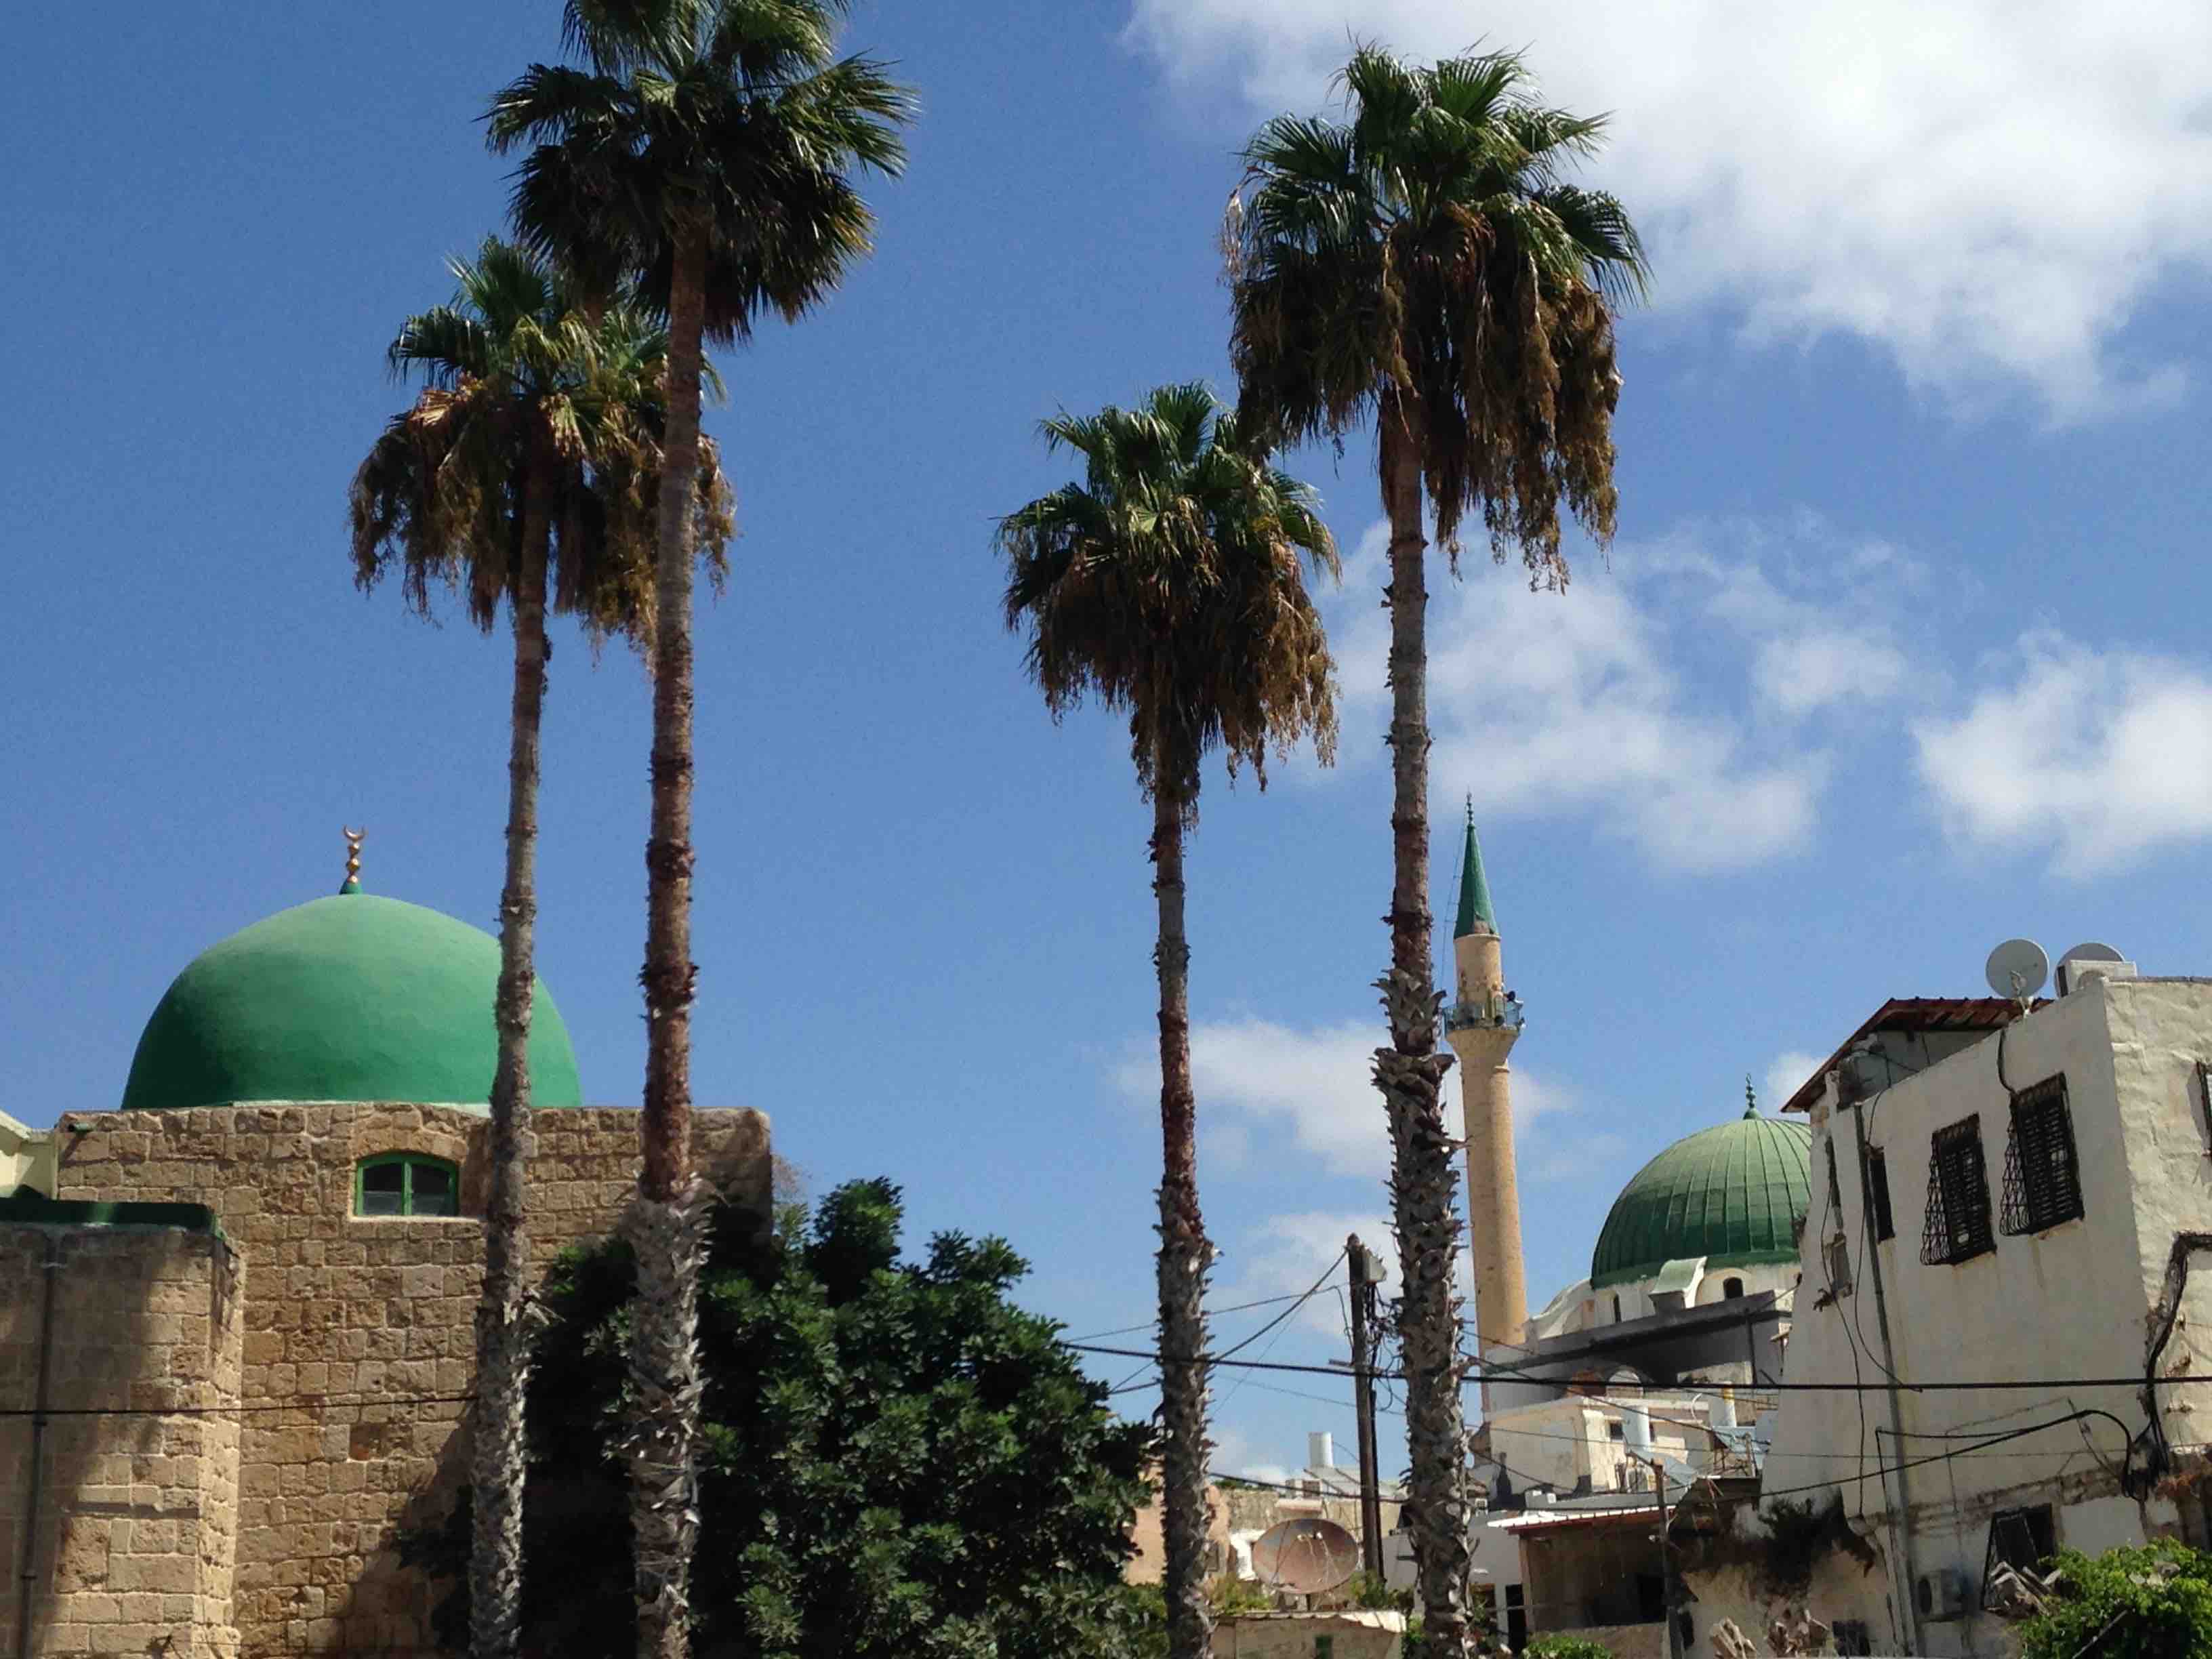 Akko_Minaret_Mosque_Palms_2935_LO